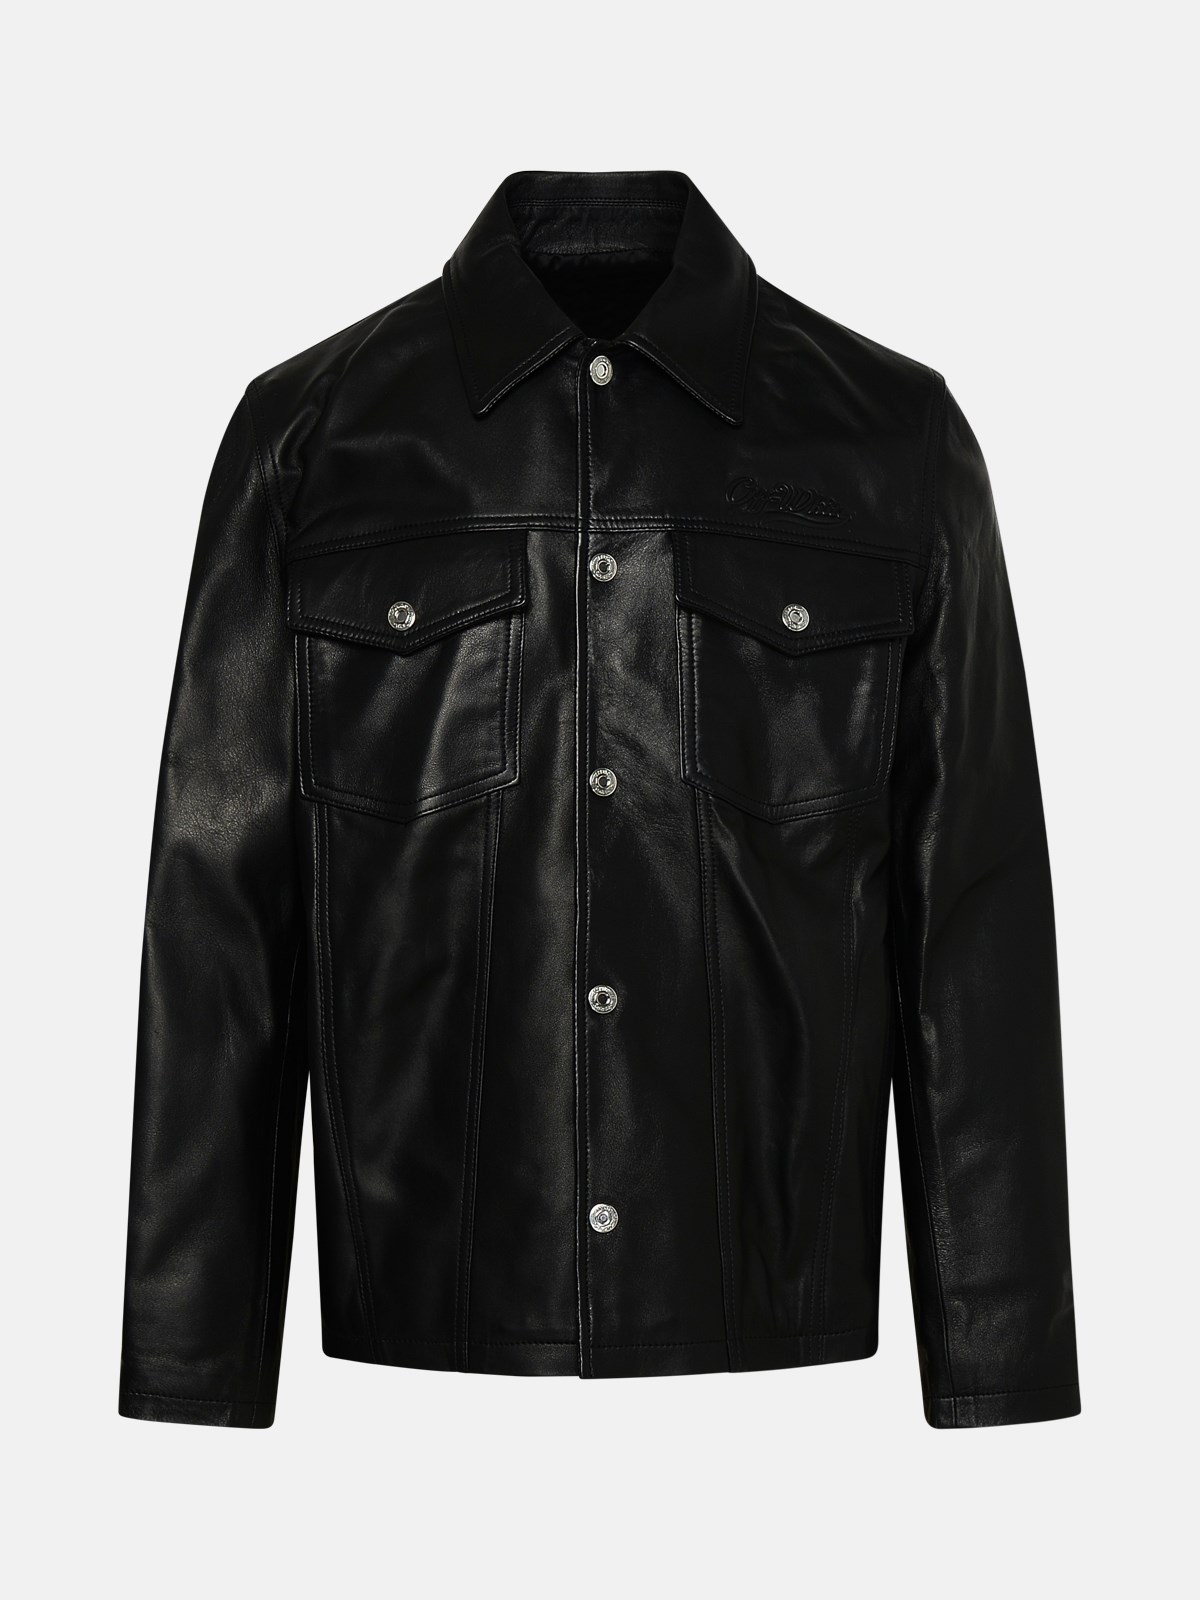 Off-white Black Leather Shirt